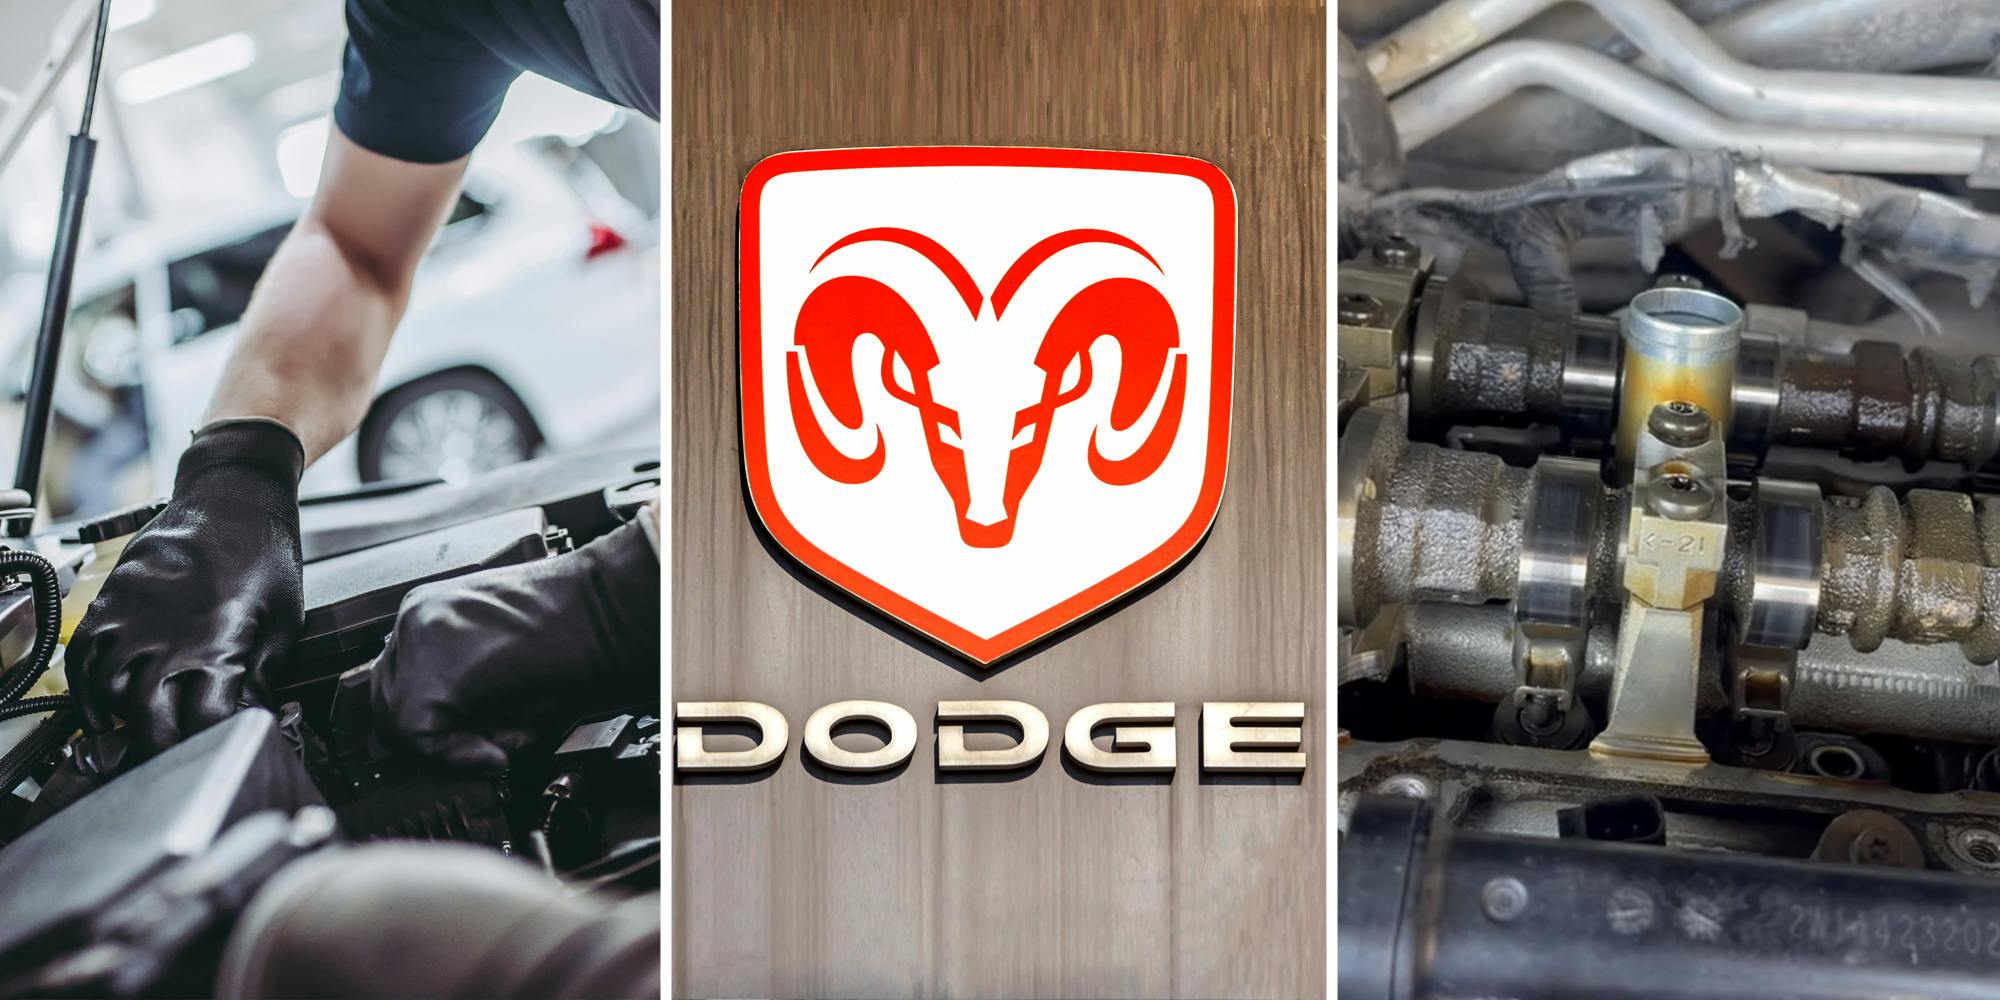 Mechanic working on engine(l), Dodge logo(c), Engine(r)